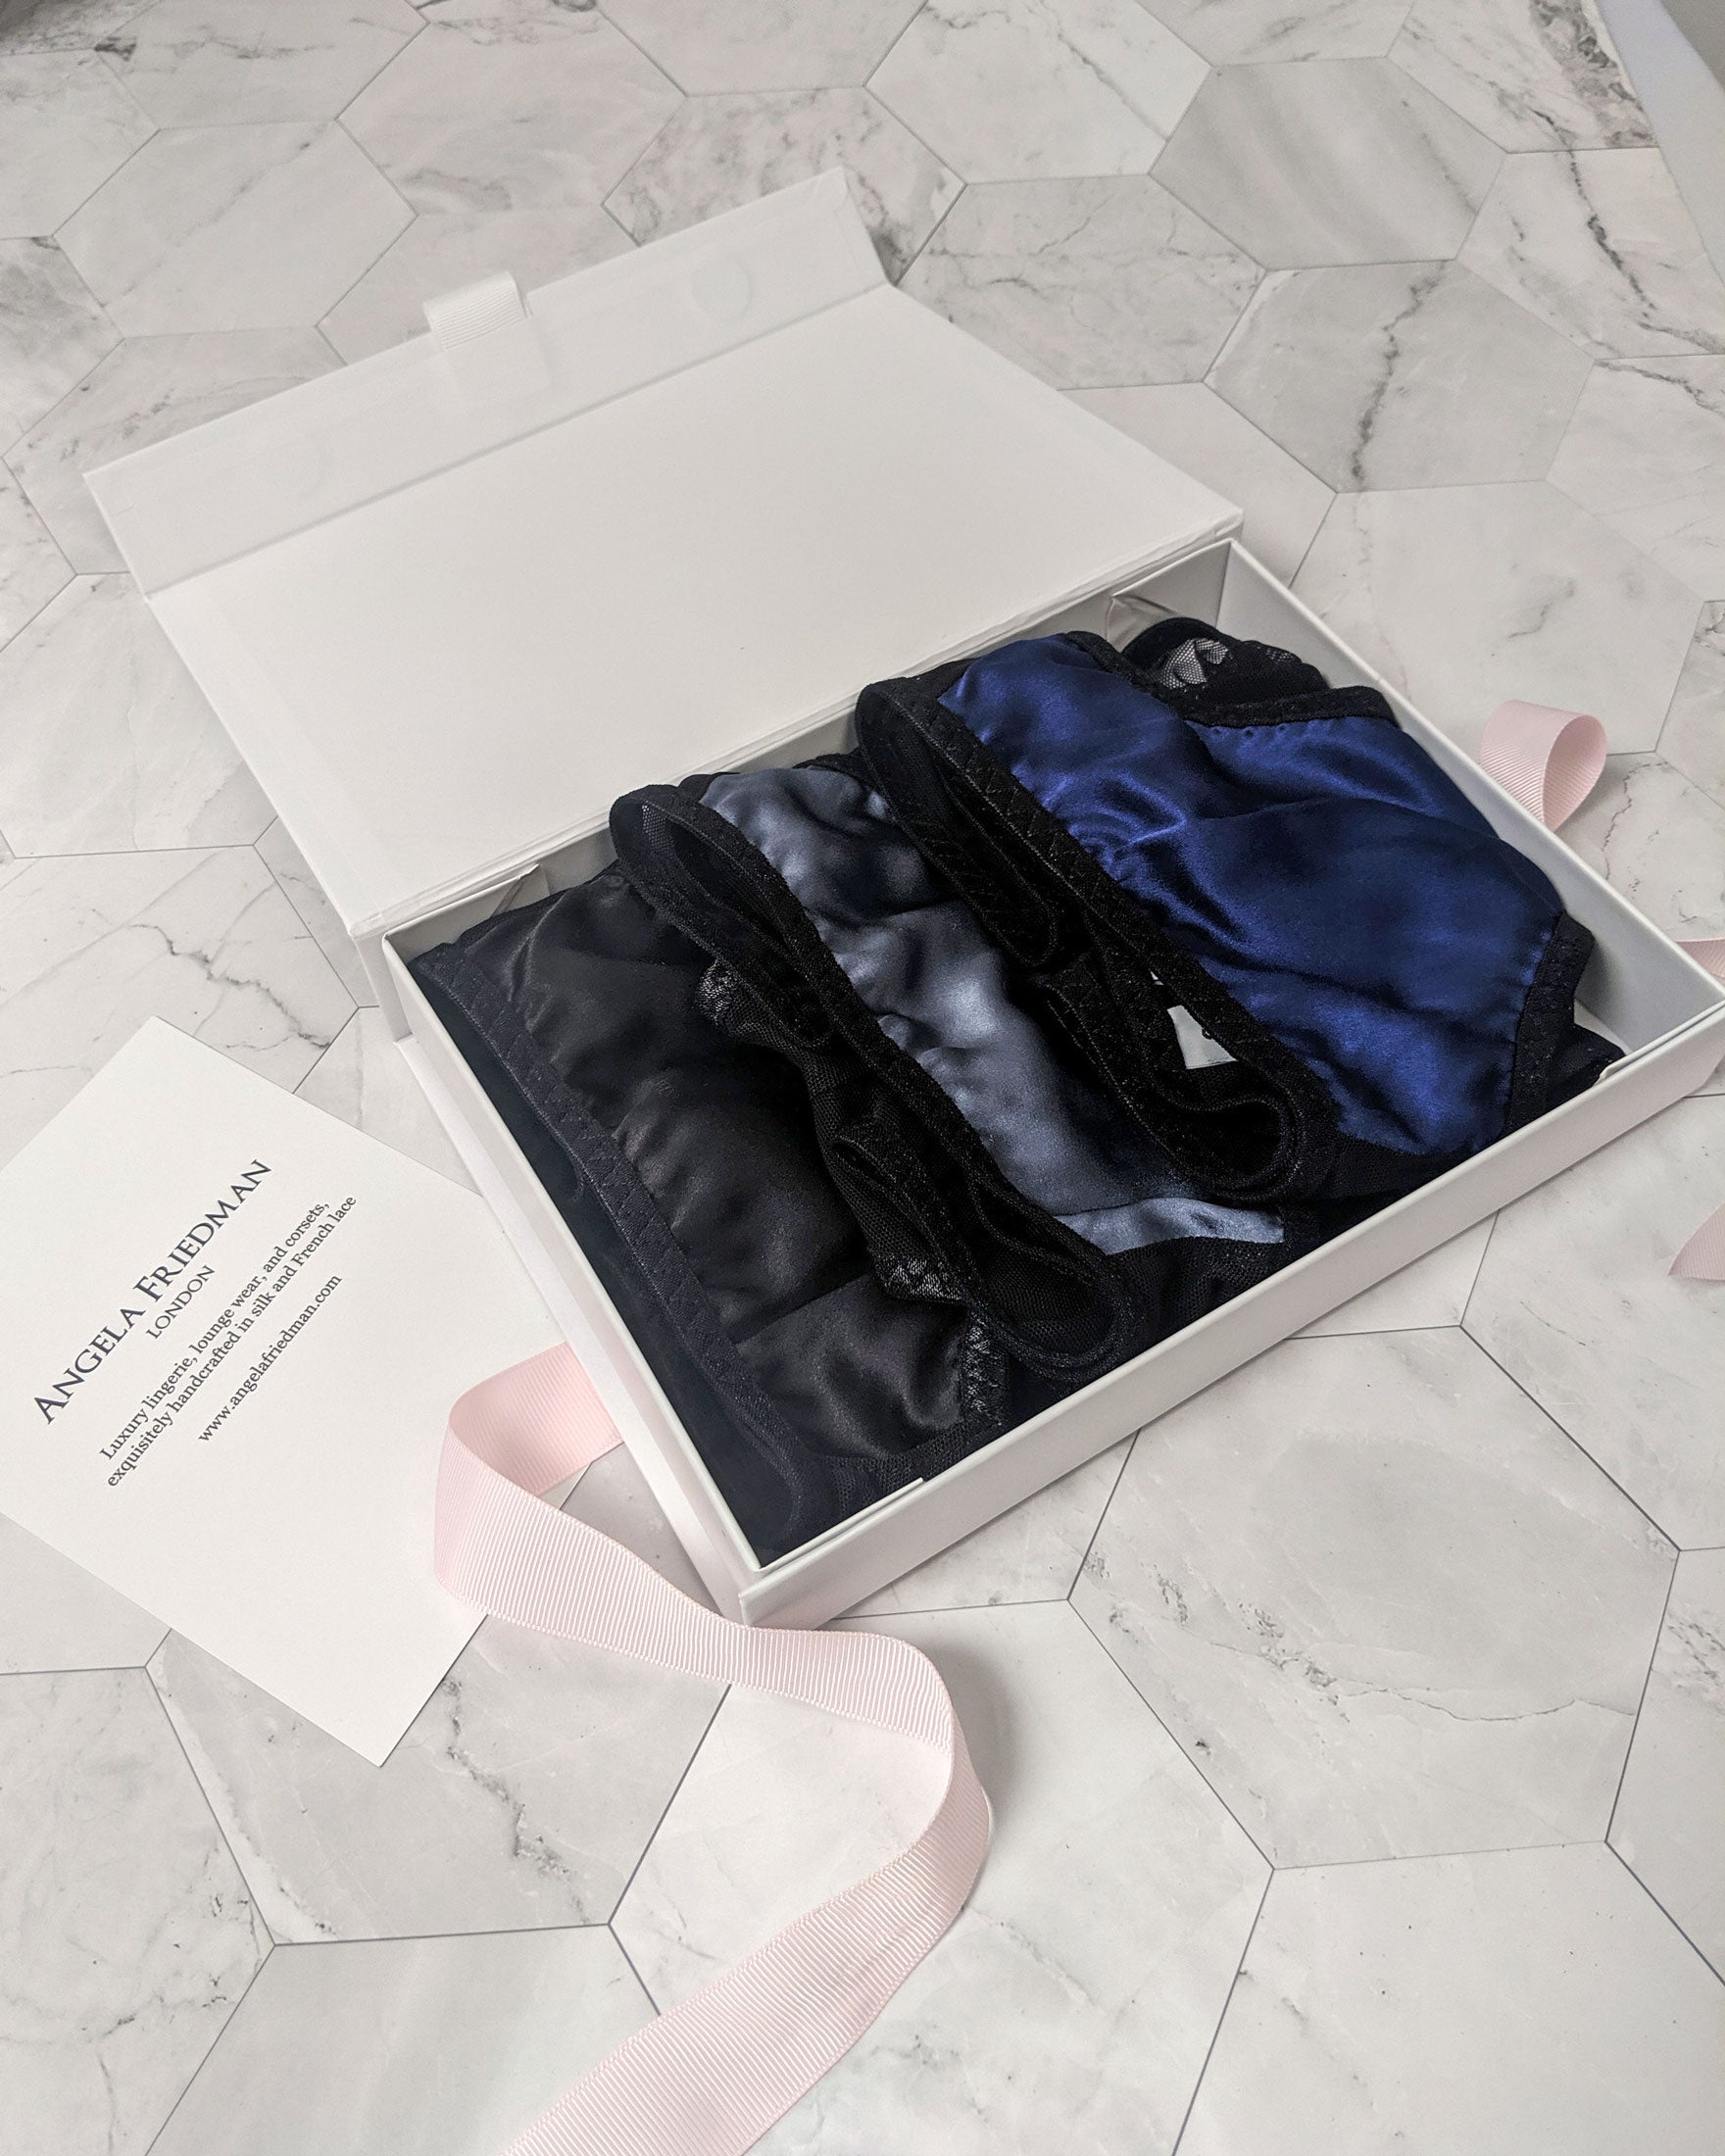 3 panty gift set by luxury lingerie designer Angela Friedman